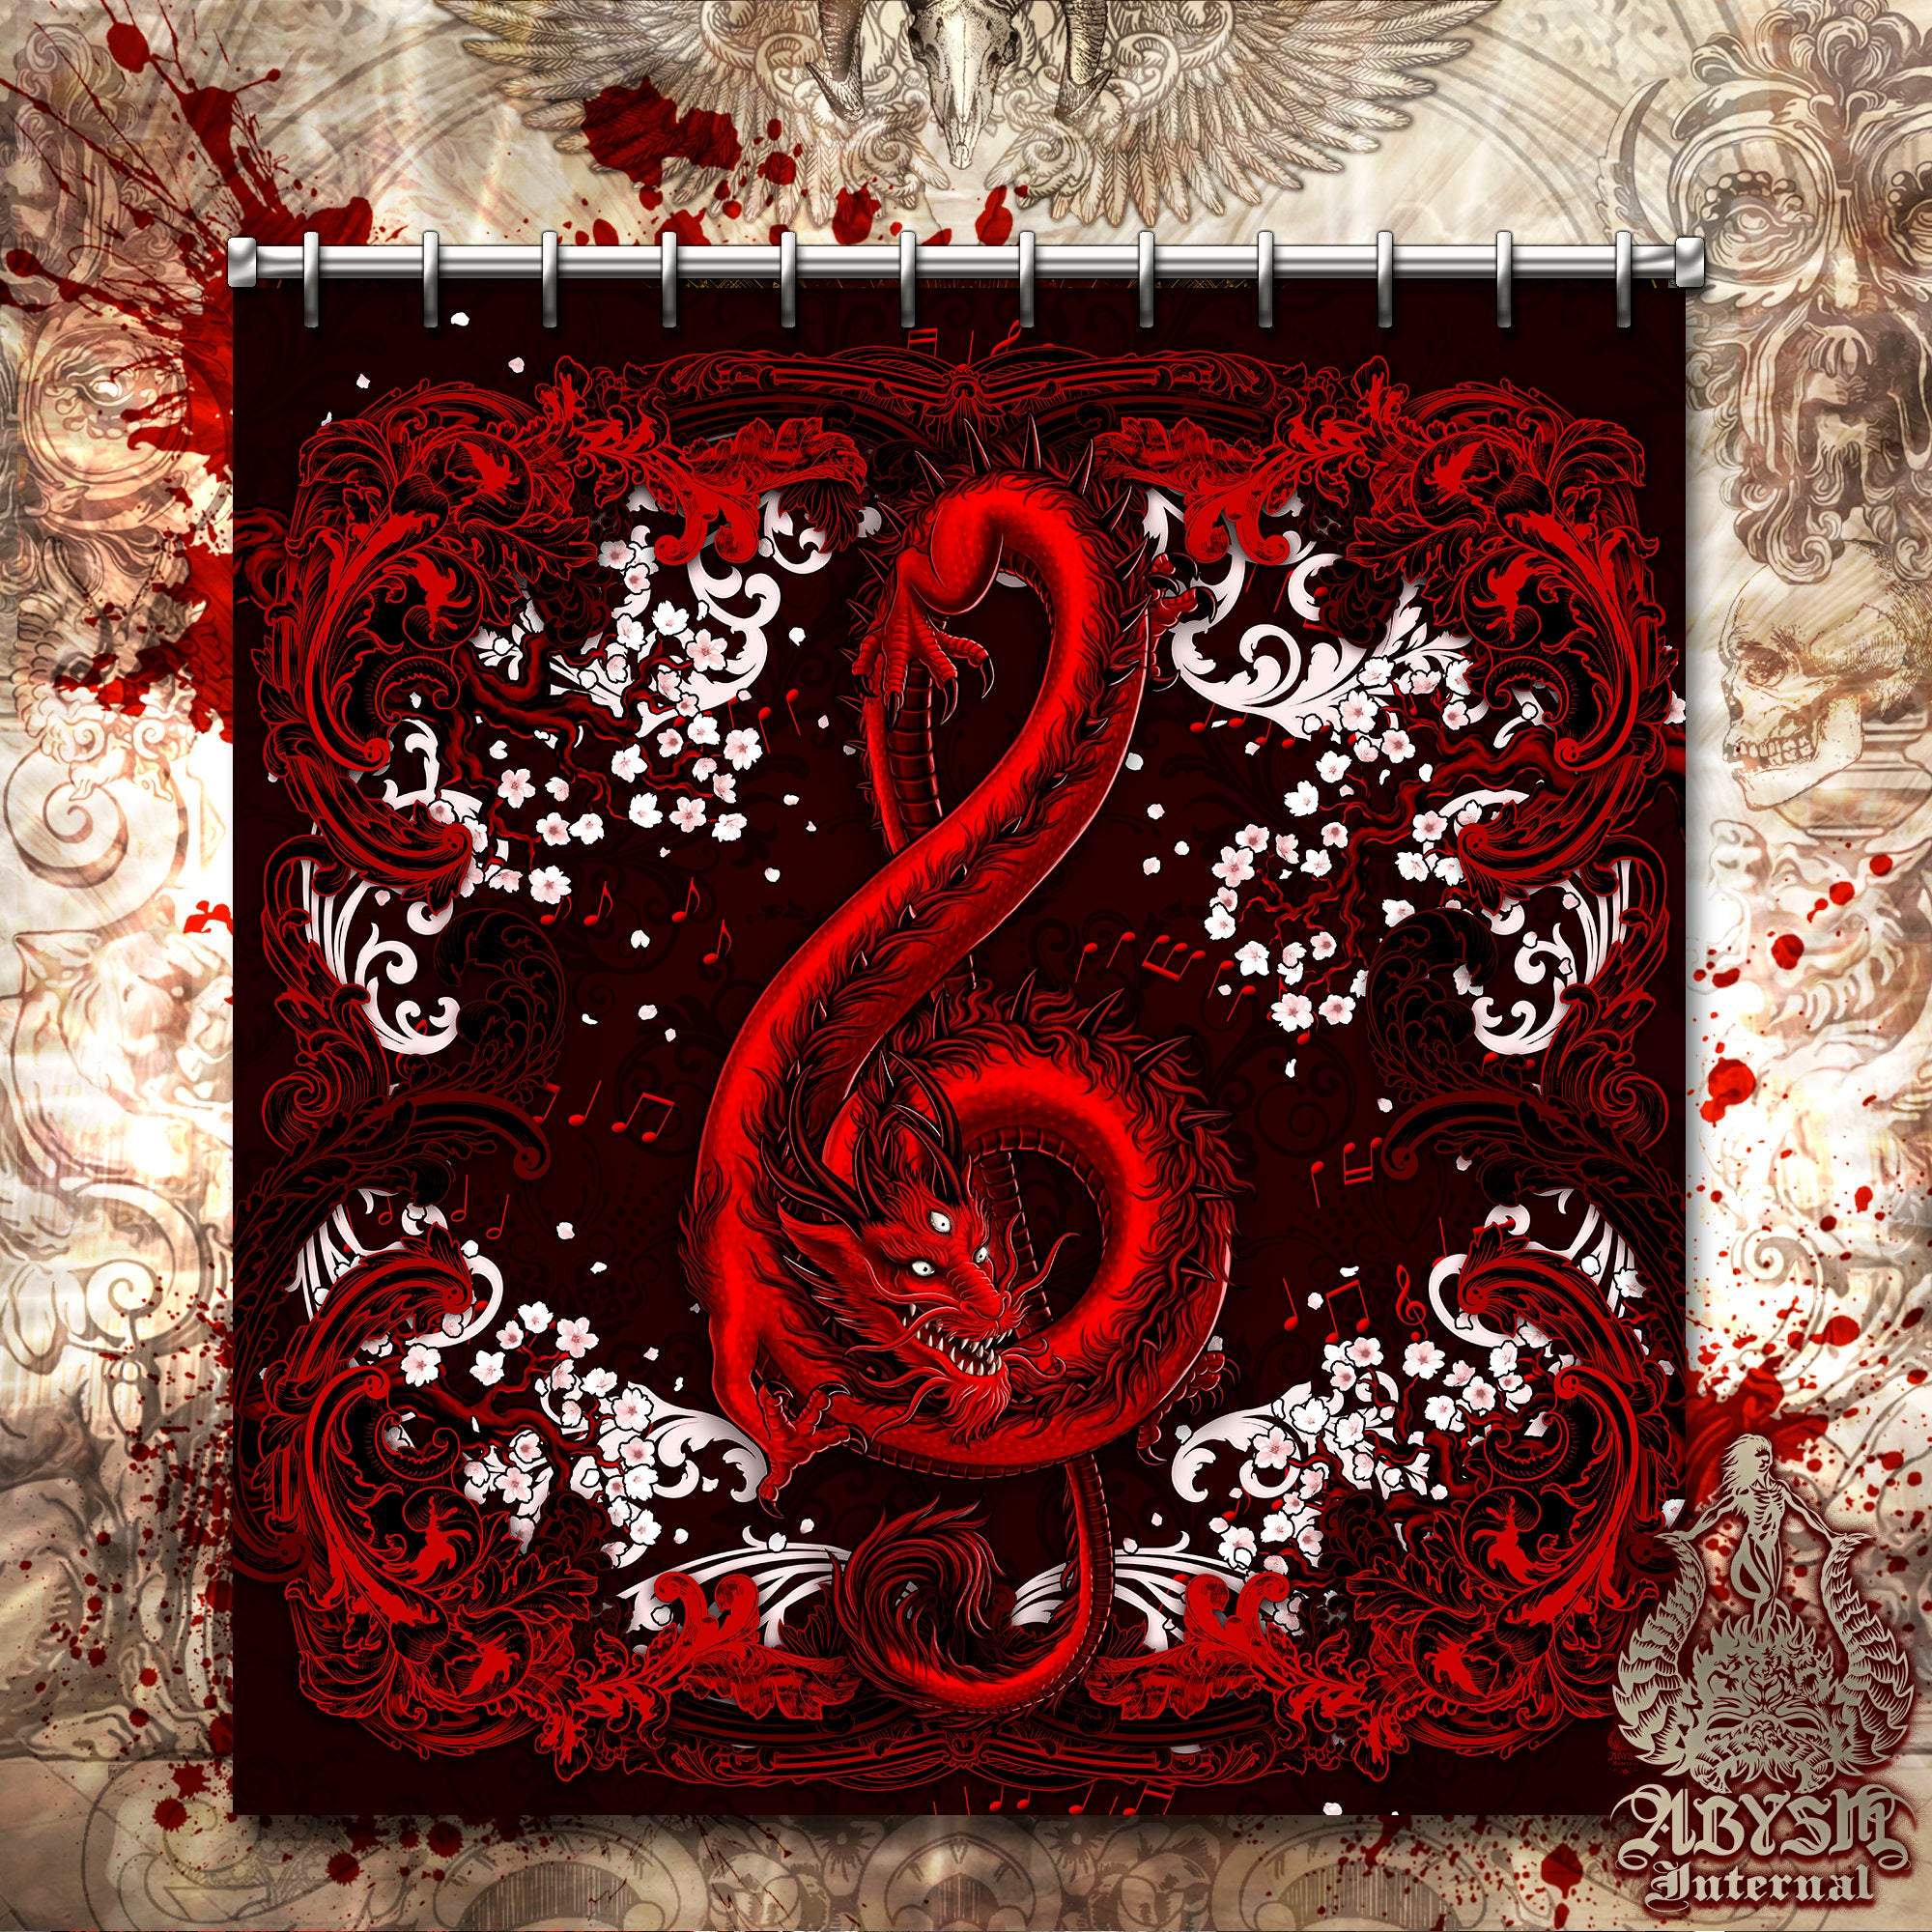 Red Dragon Shower Curtain, Music Art, Gothic Bathroom Decor, Treble Clef - Bloody Black - Abysm Internal